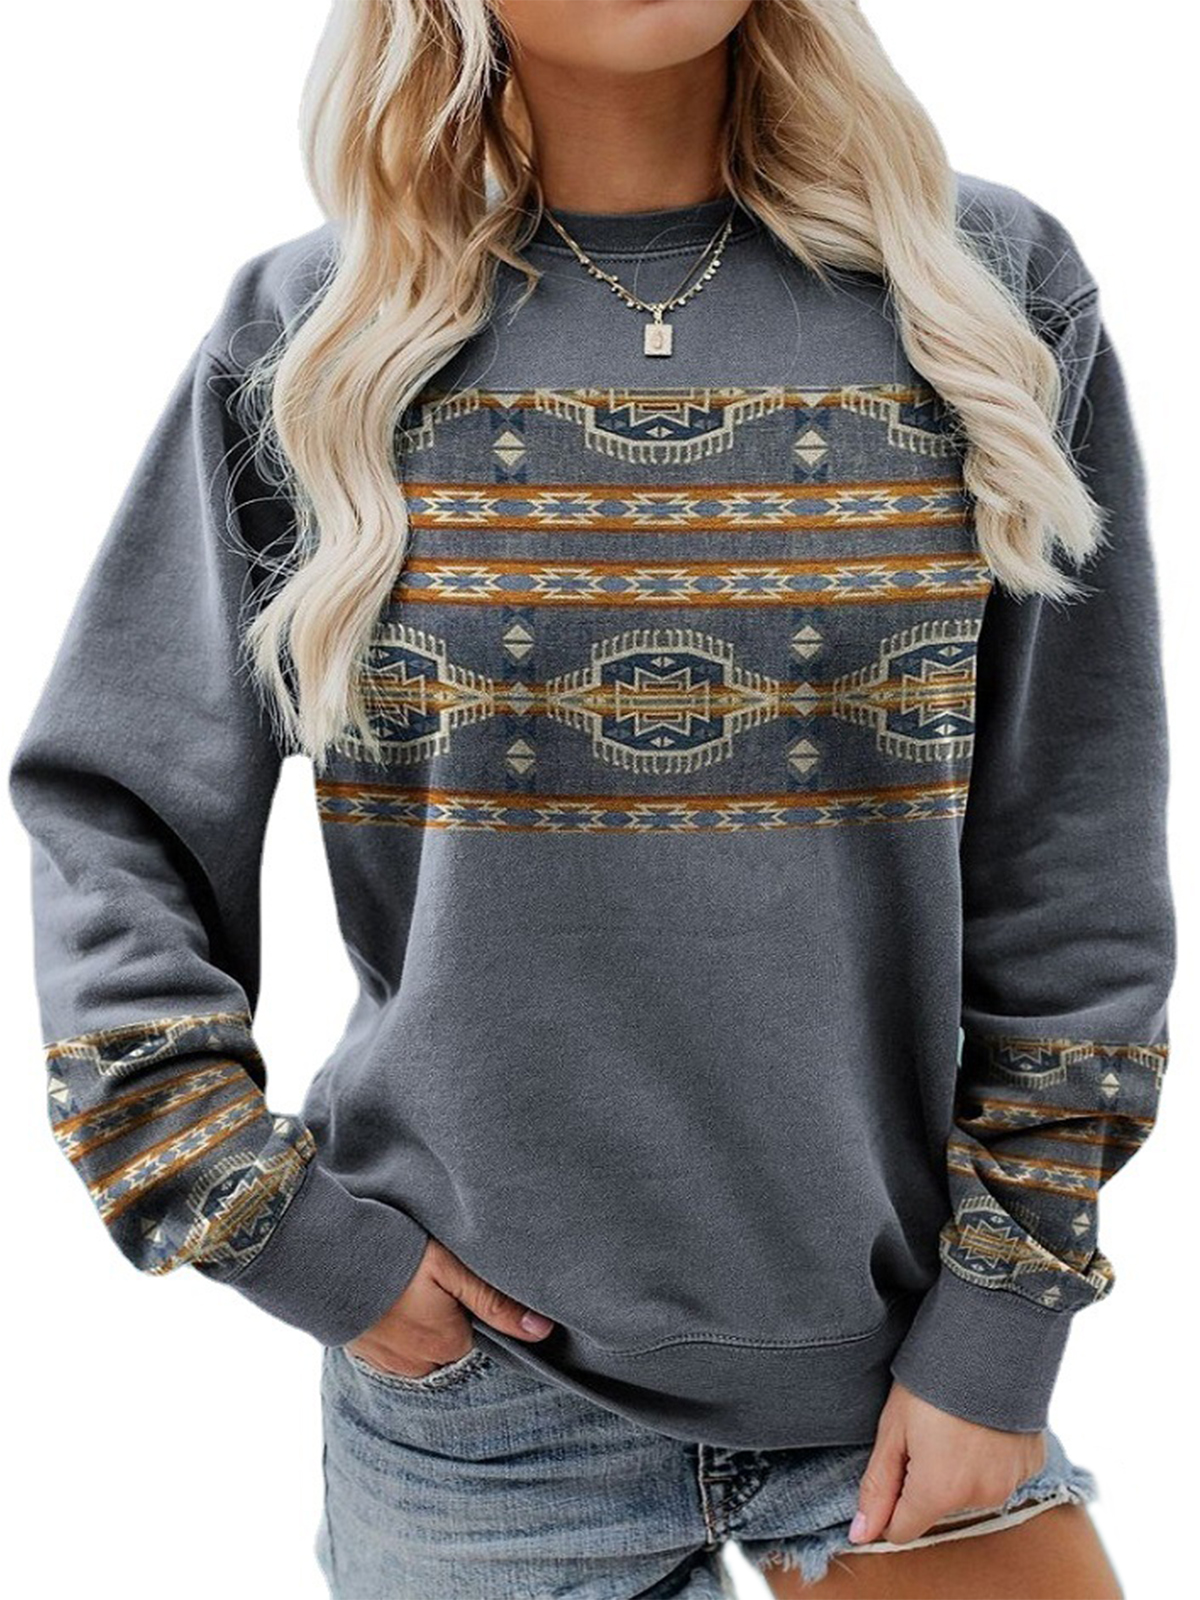 Women's Vintage Western Ethnic Print Chic Sweatshirt